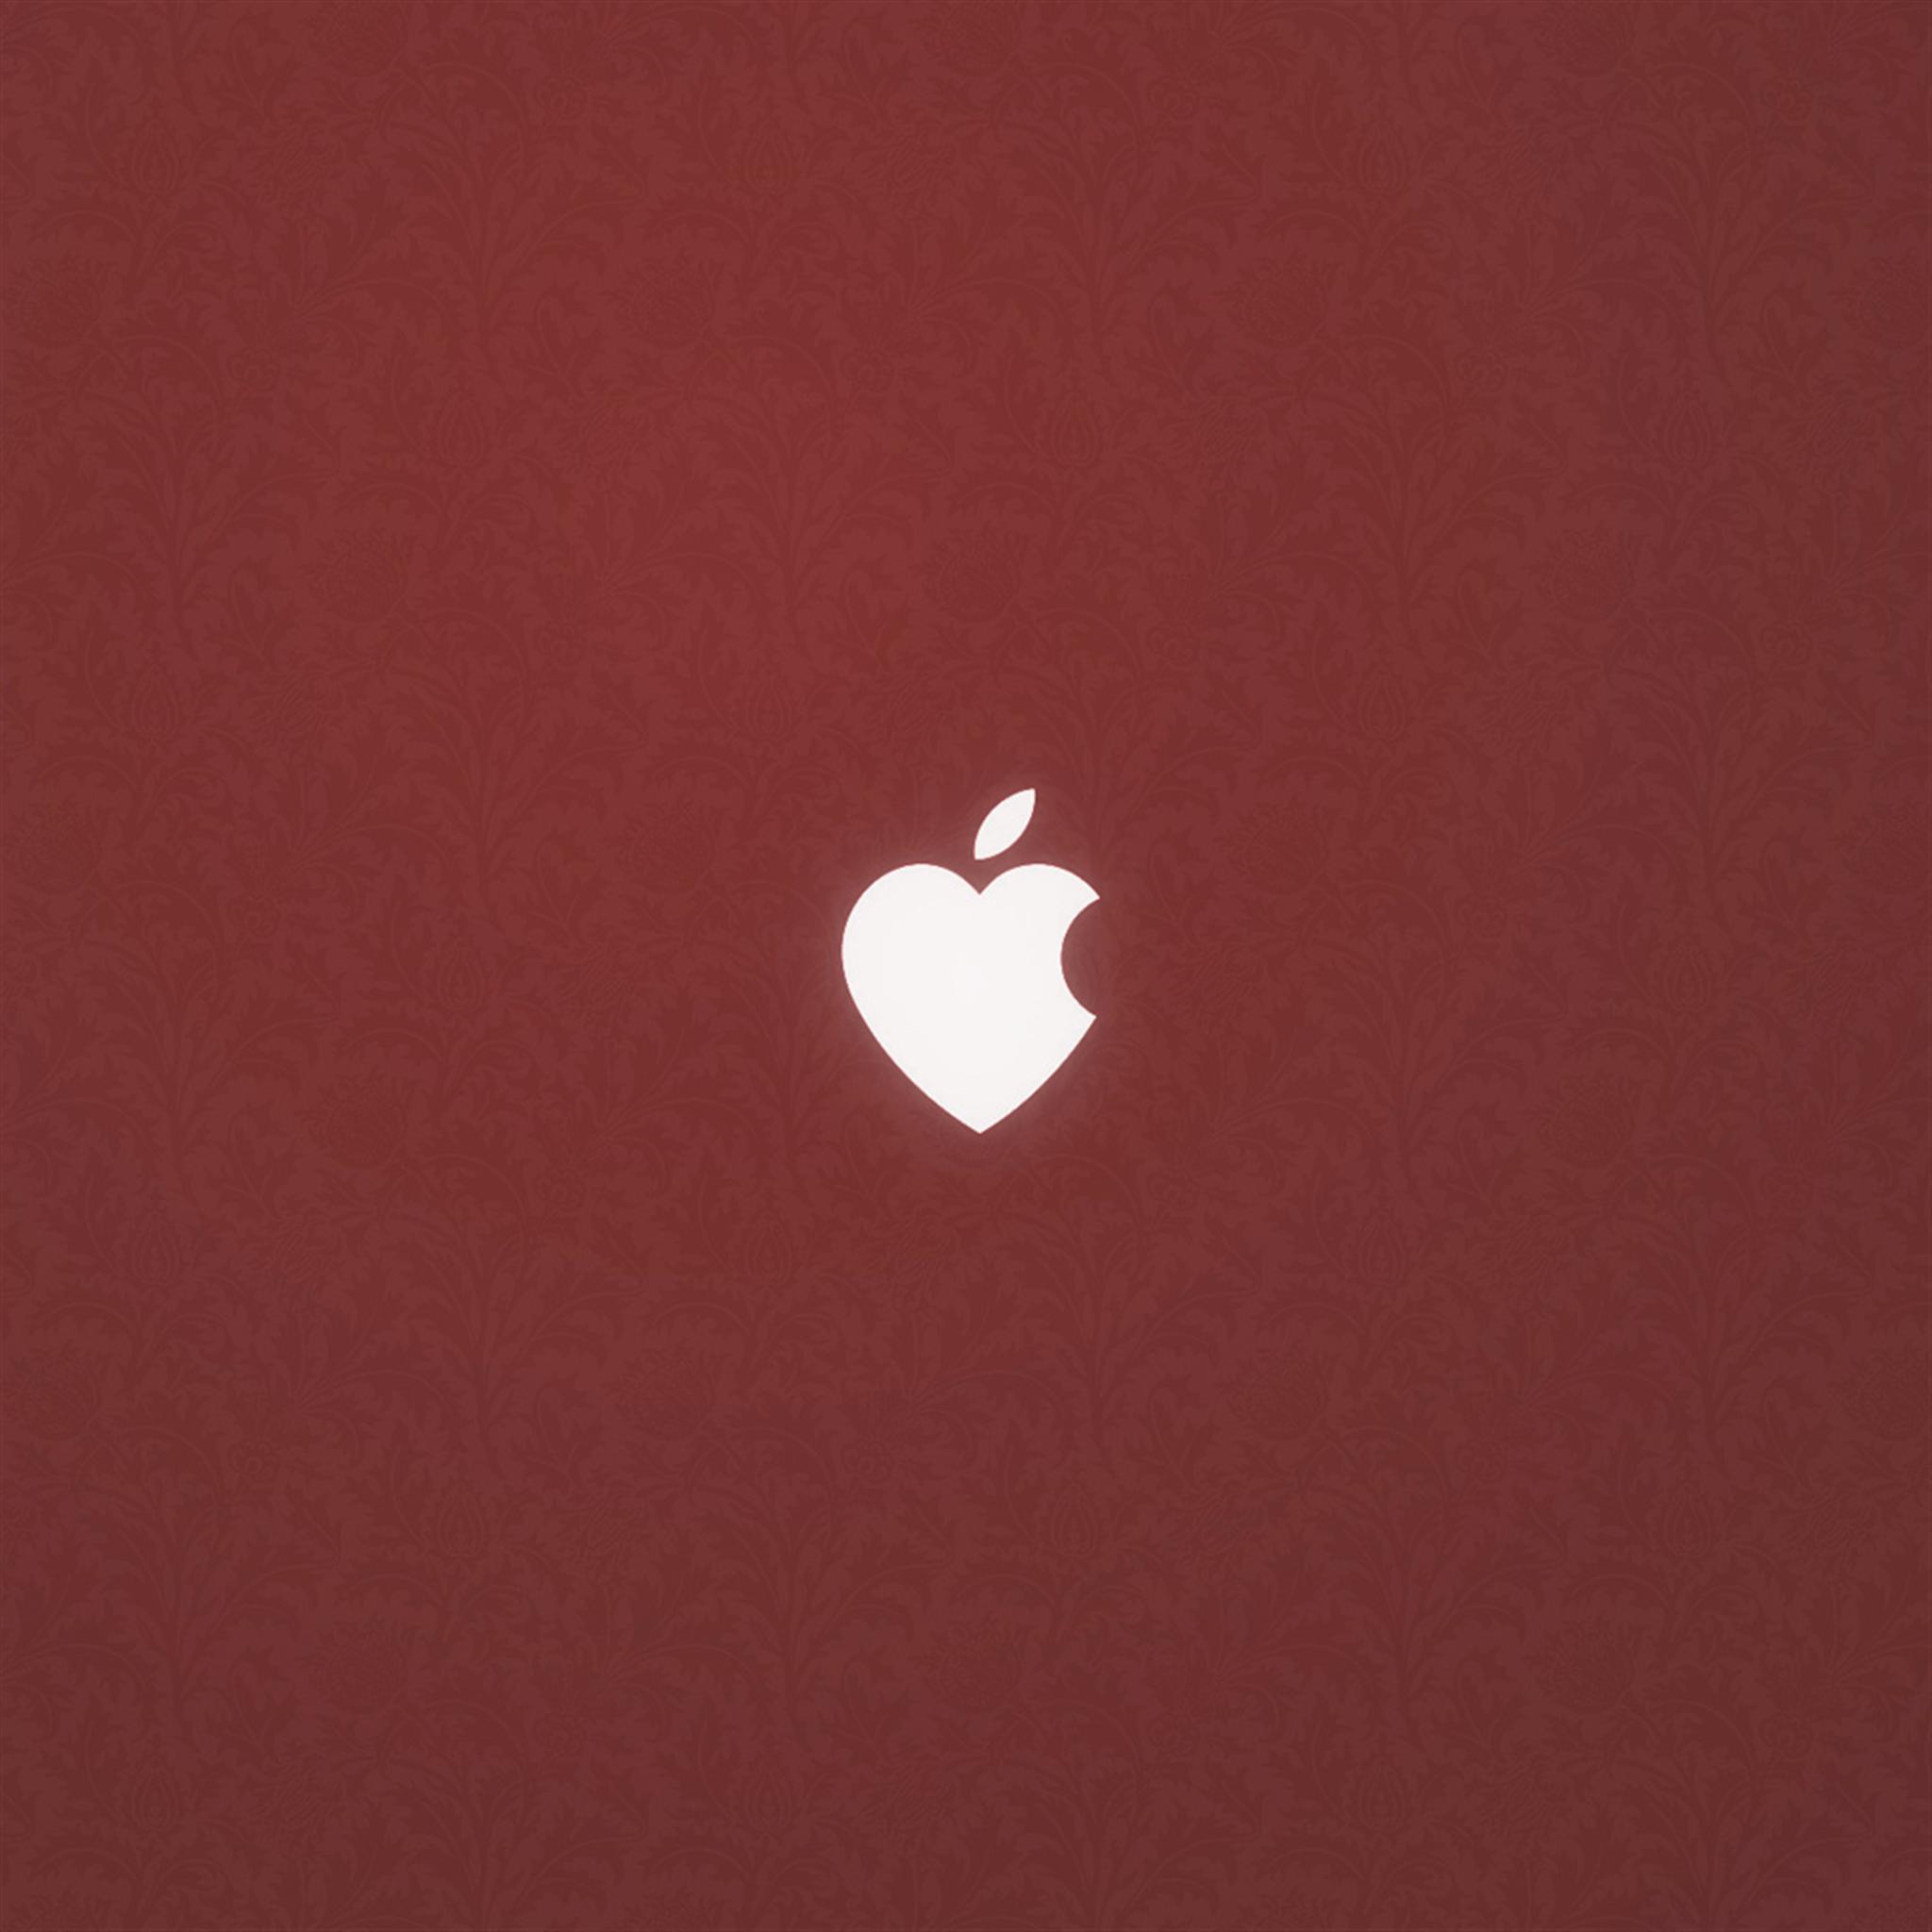 Apple iPad Air Wallpaper HD Retina And